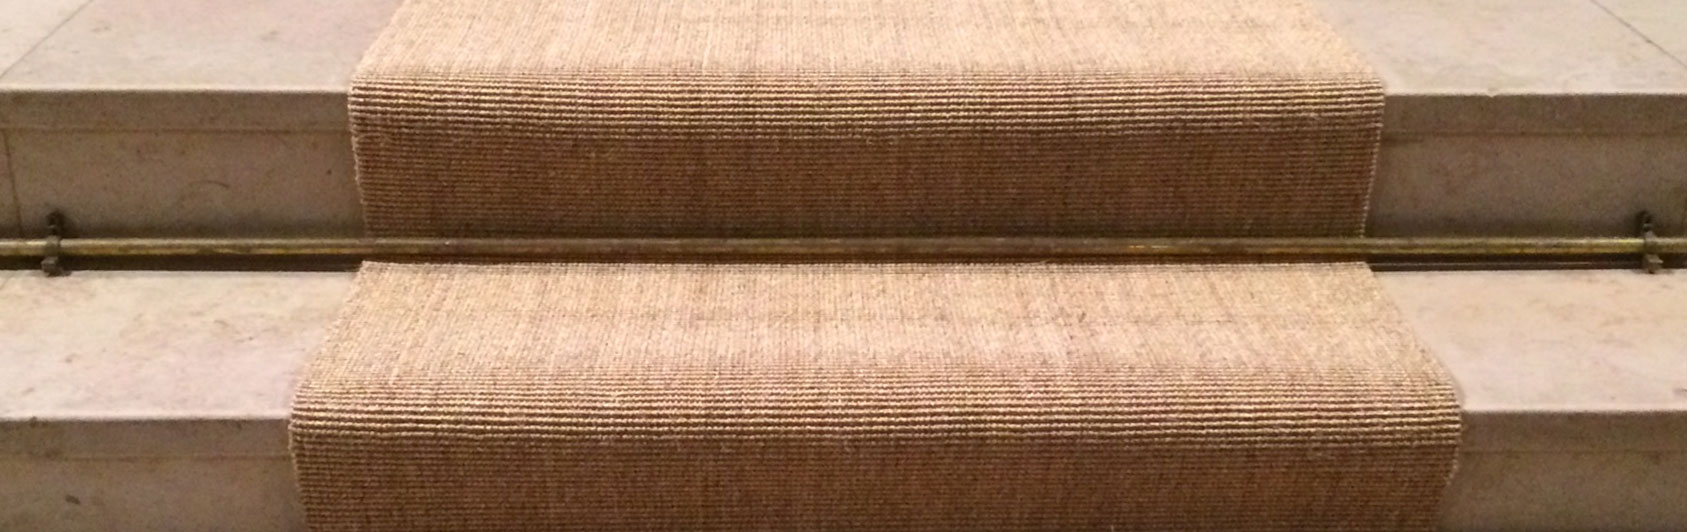 church carpet natural fibre sisal